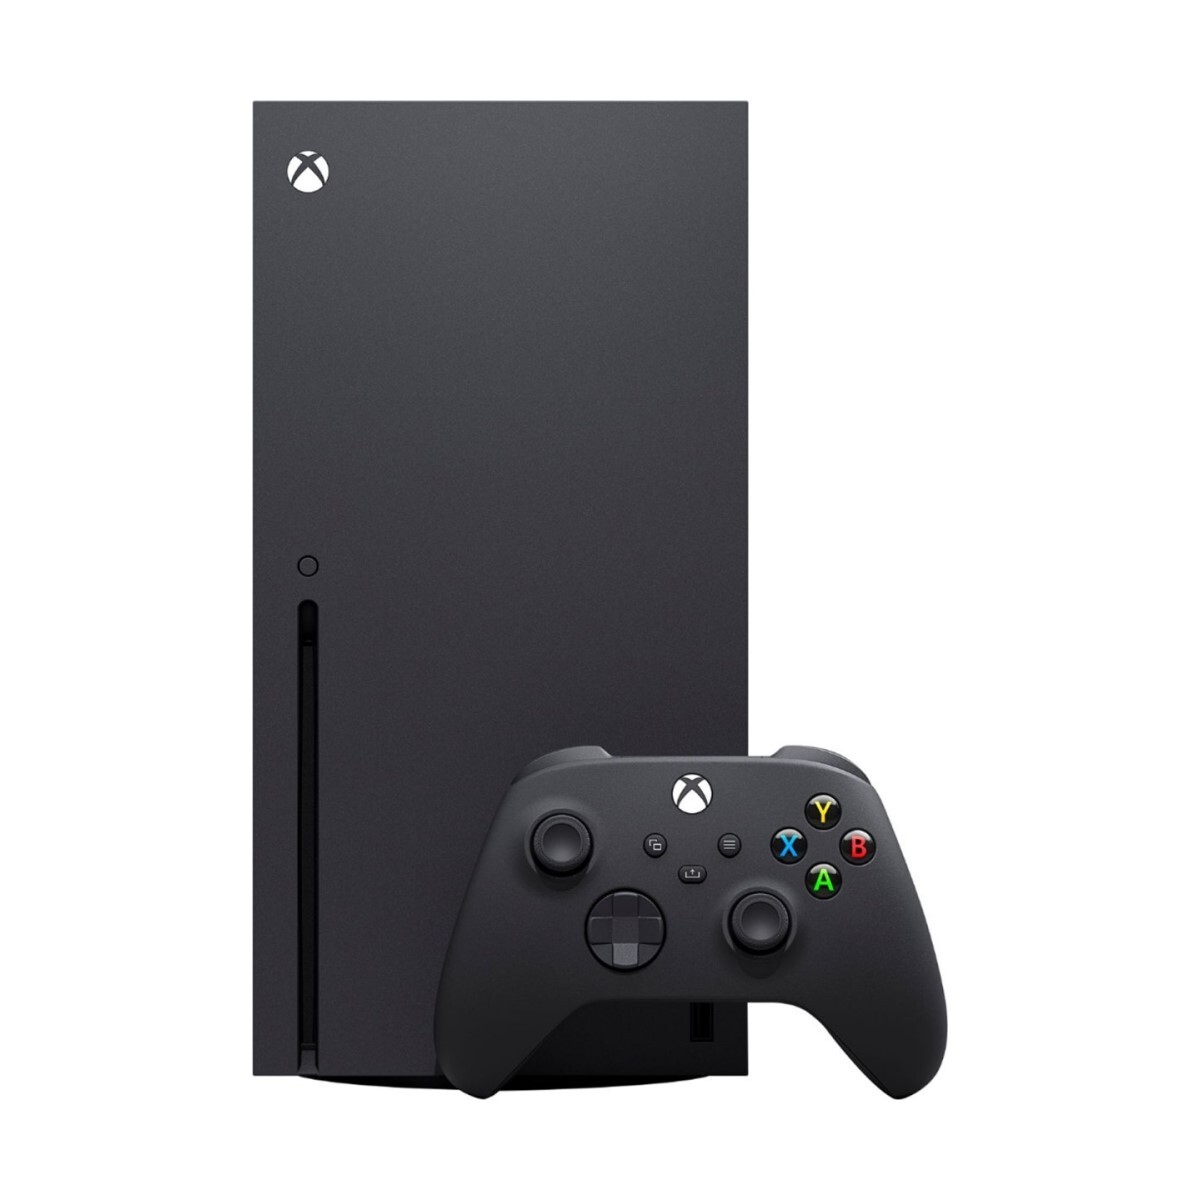 Consola Xbox Series X Microsoft 1TB SSD 4K Negro